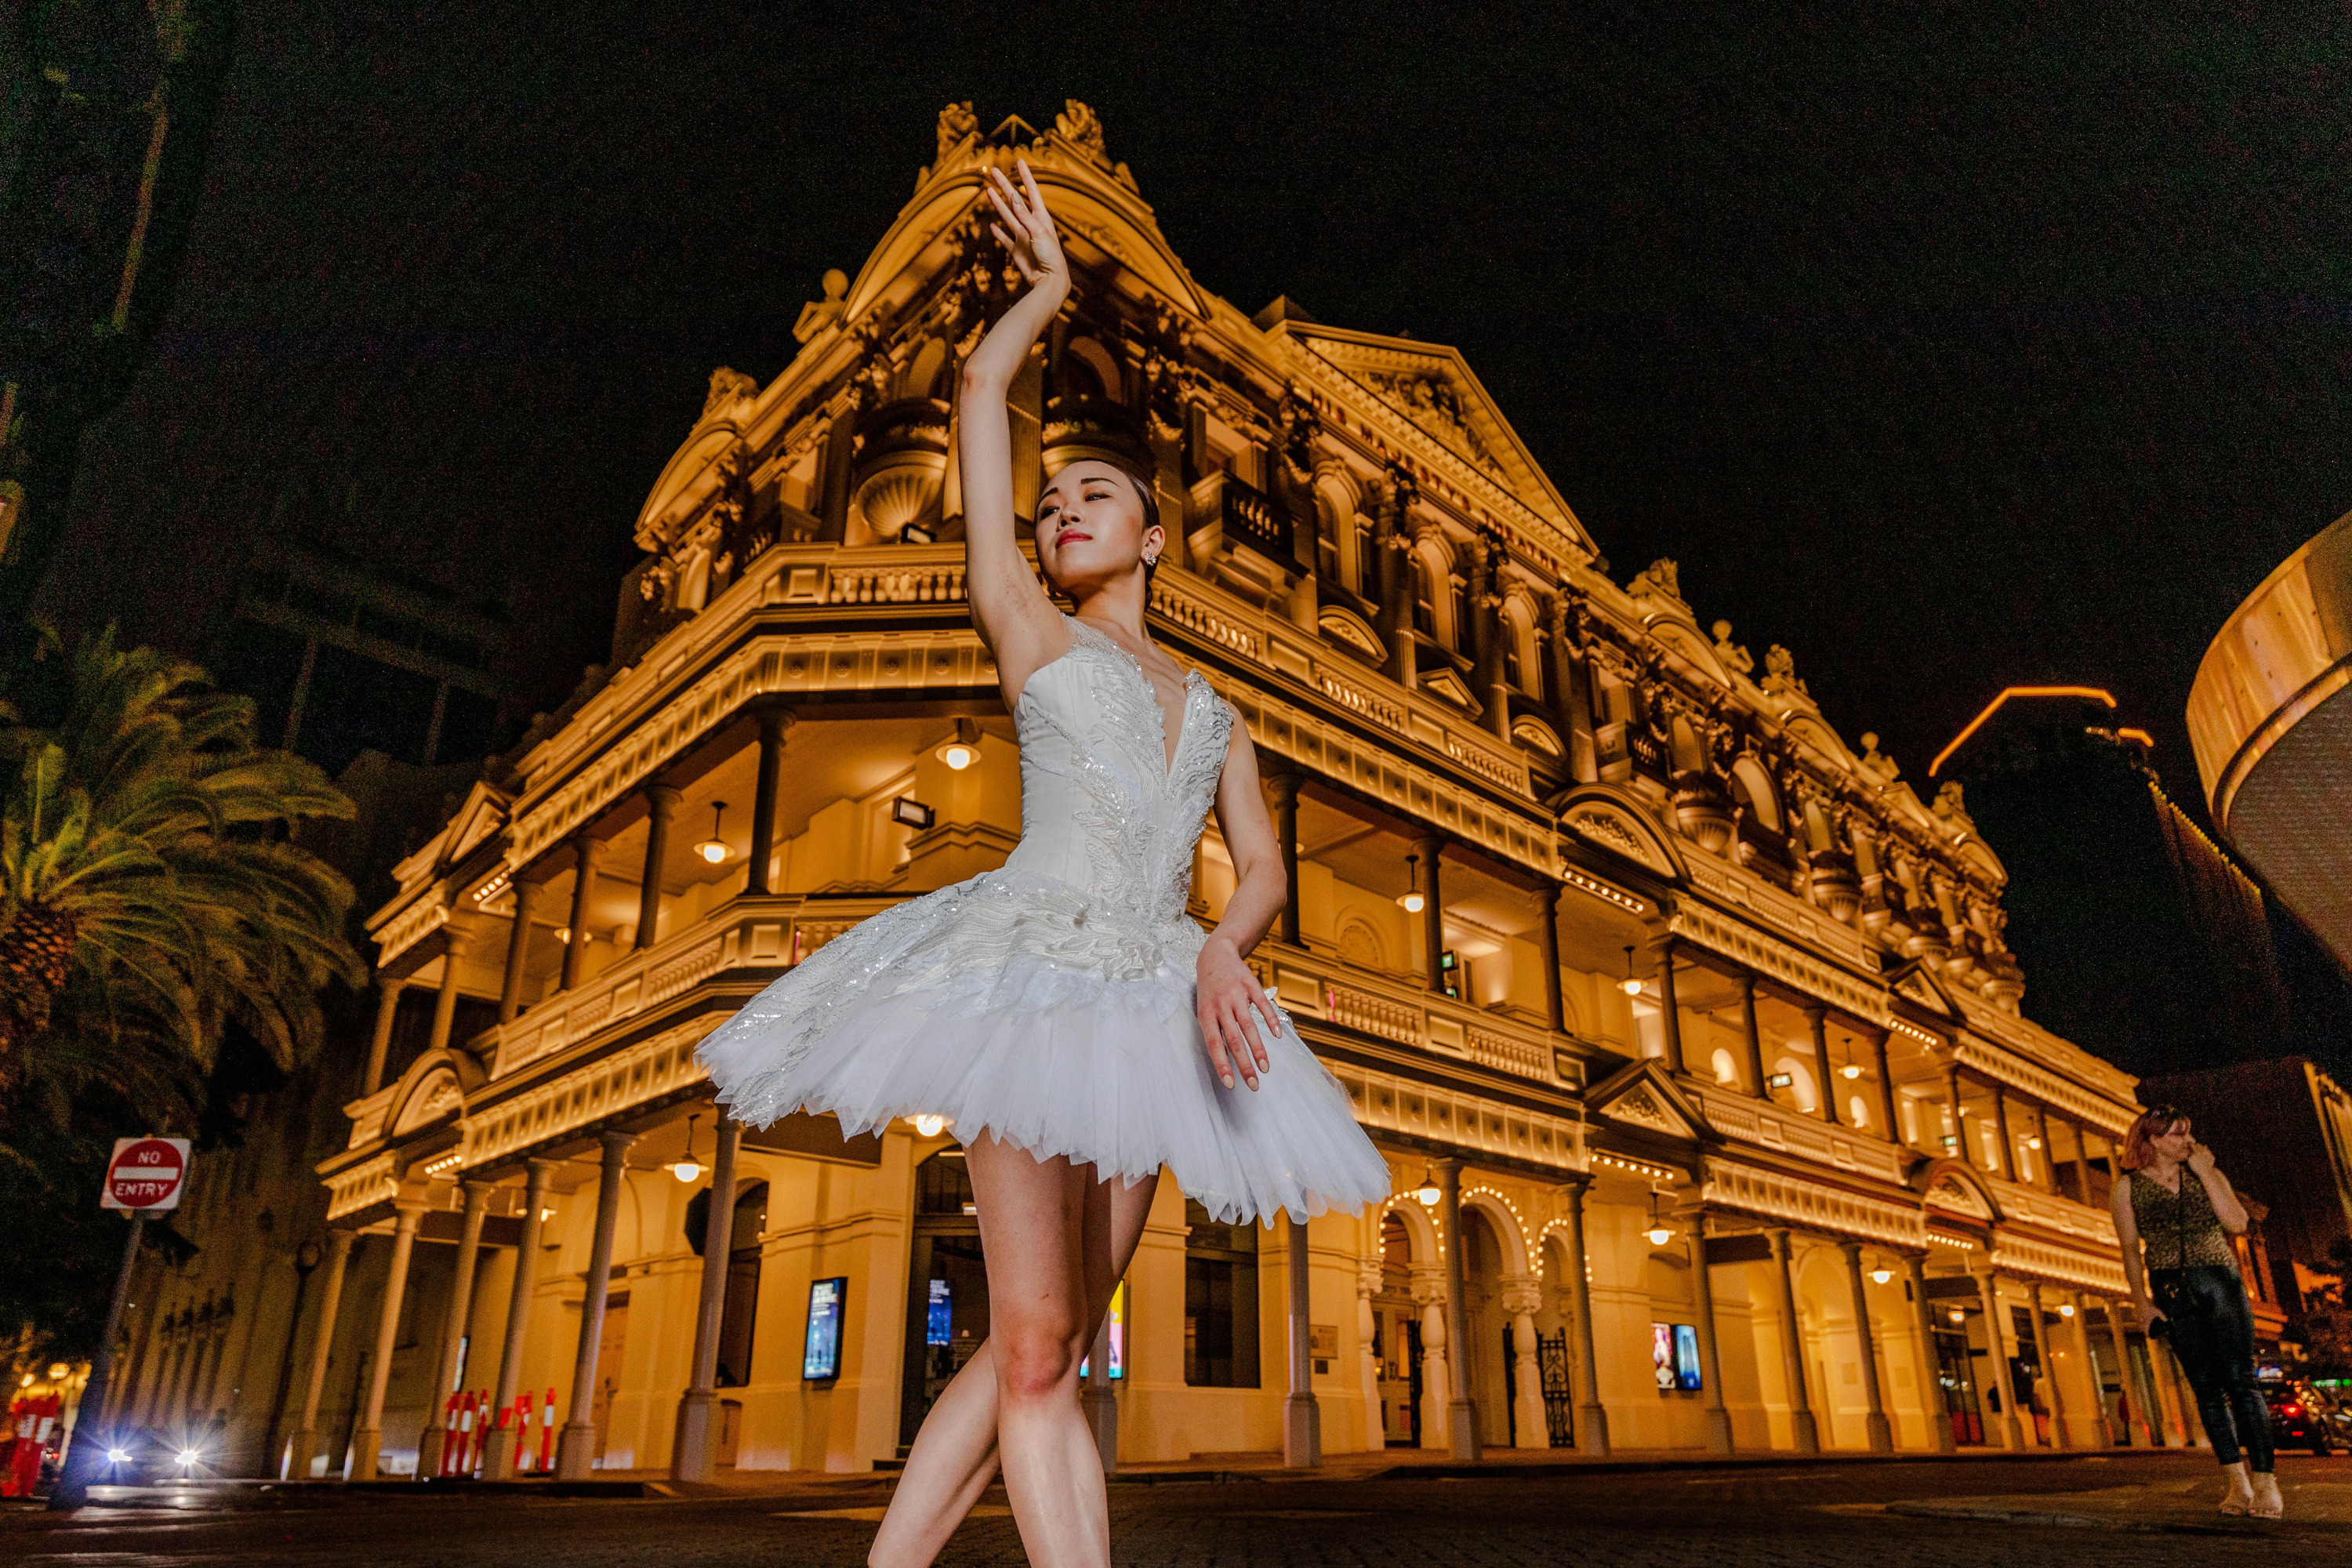 Kiki Saito ballerina at His Majesty's Theatre